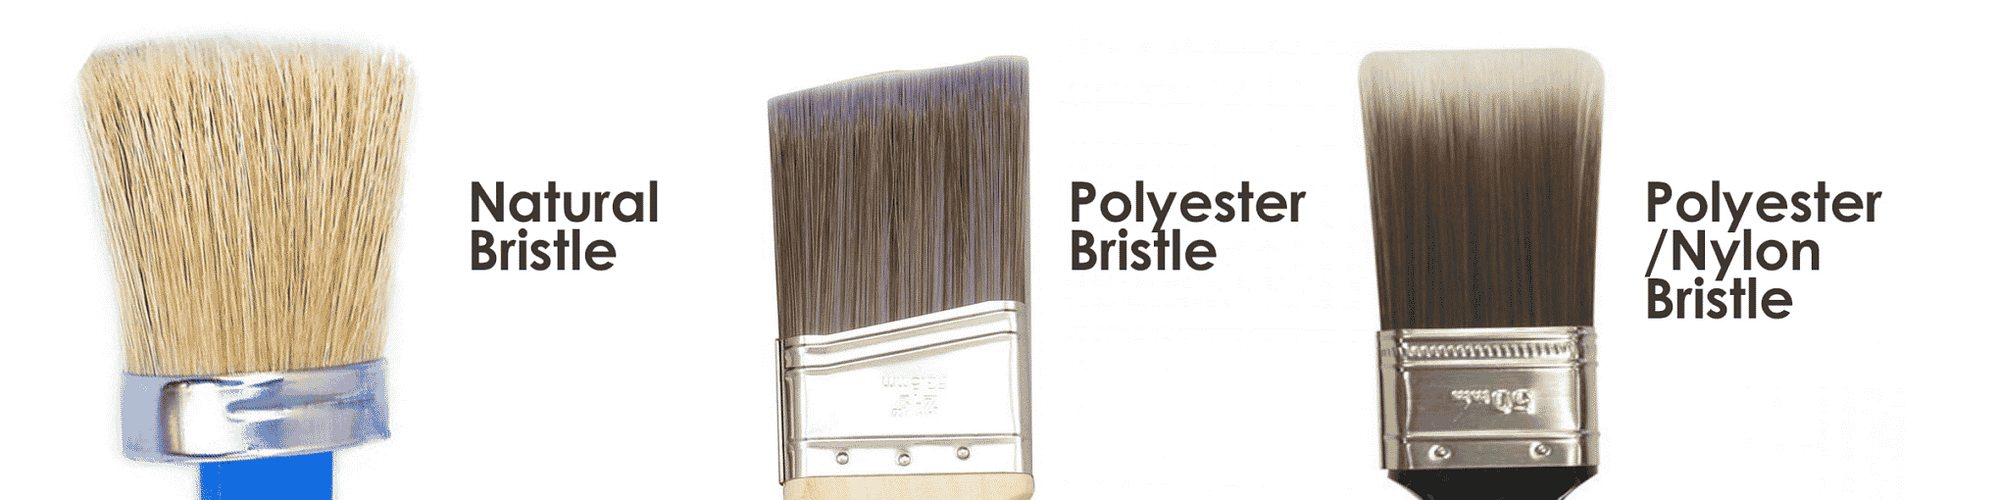 Different Brush Types: Natural Bristle, Polyester Bristle, Polyester/Nylon Bristle